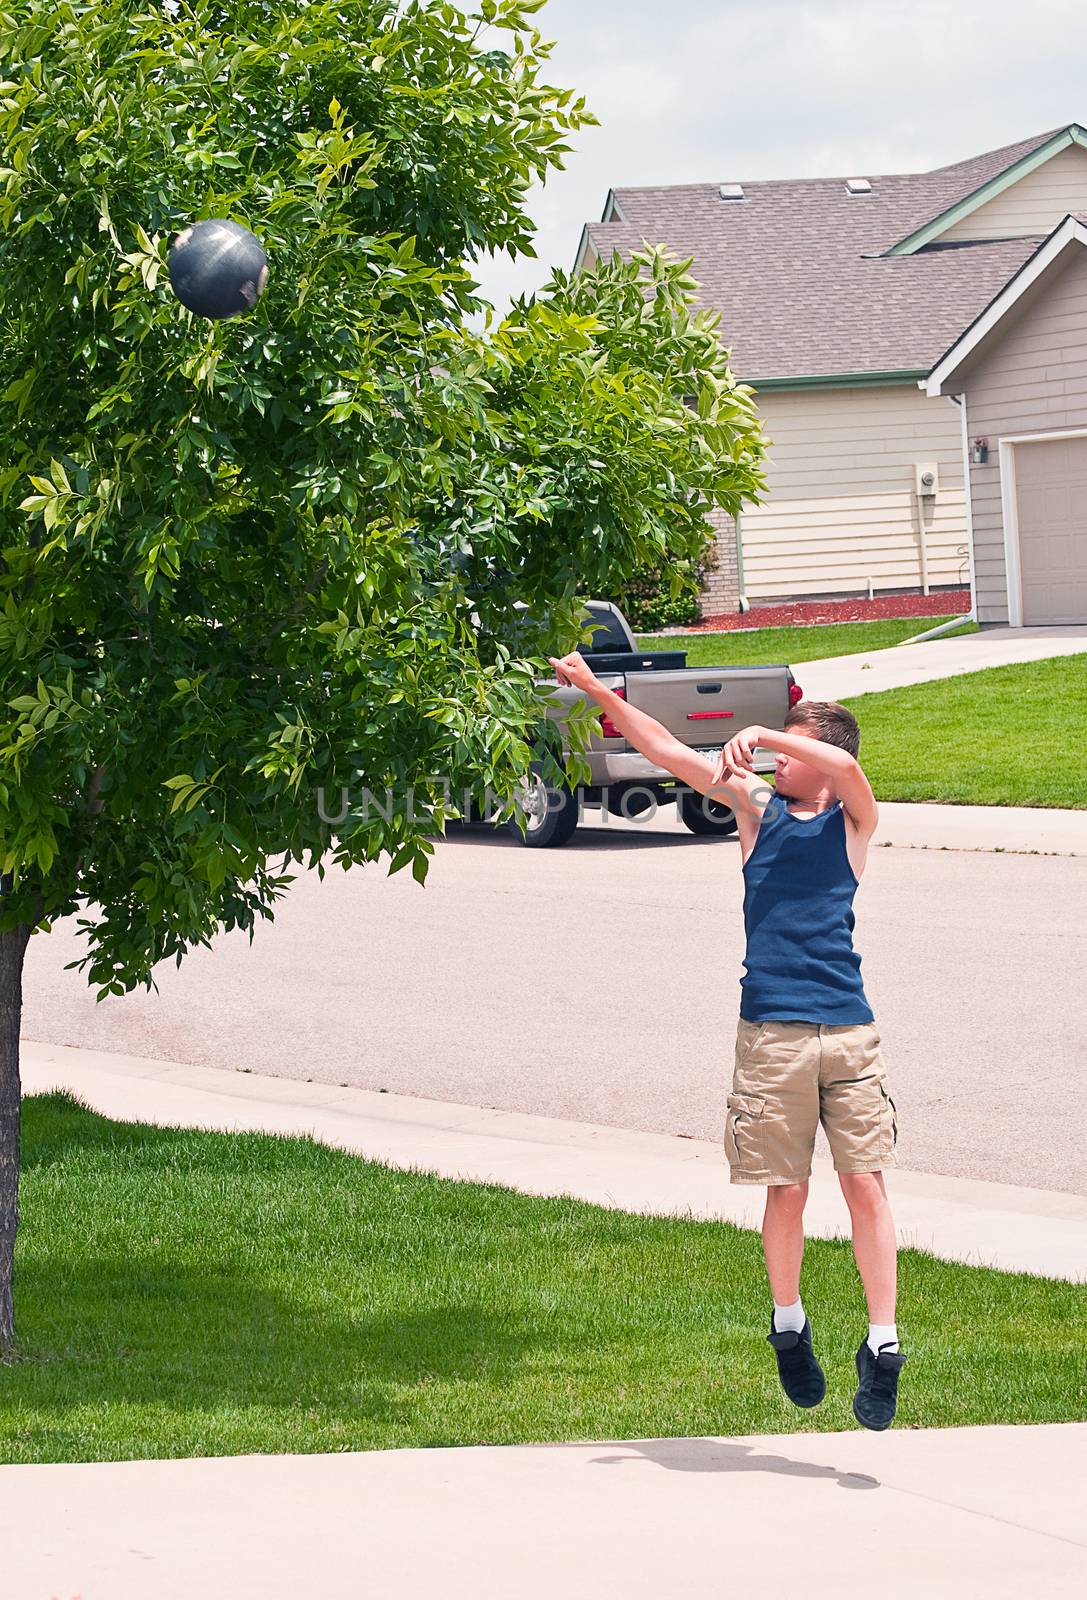 Teenage boy shooting a basketball at his home practice hoop